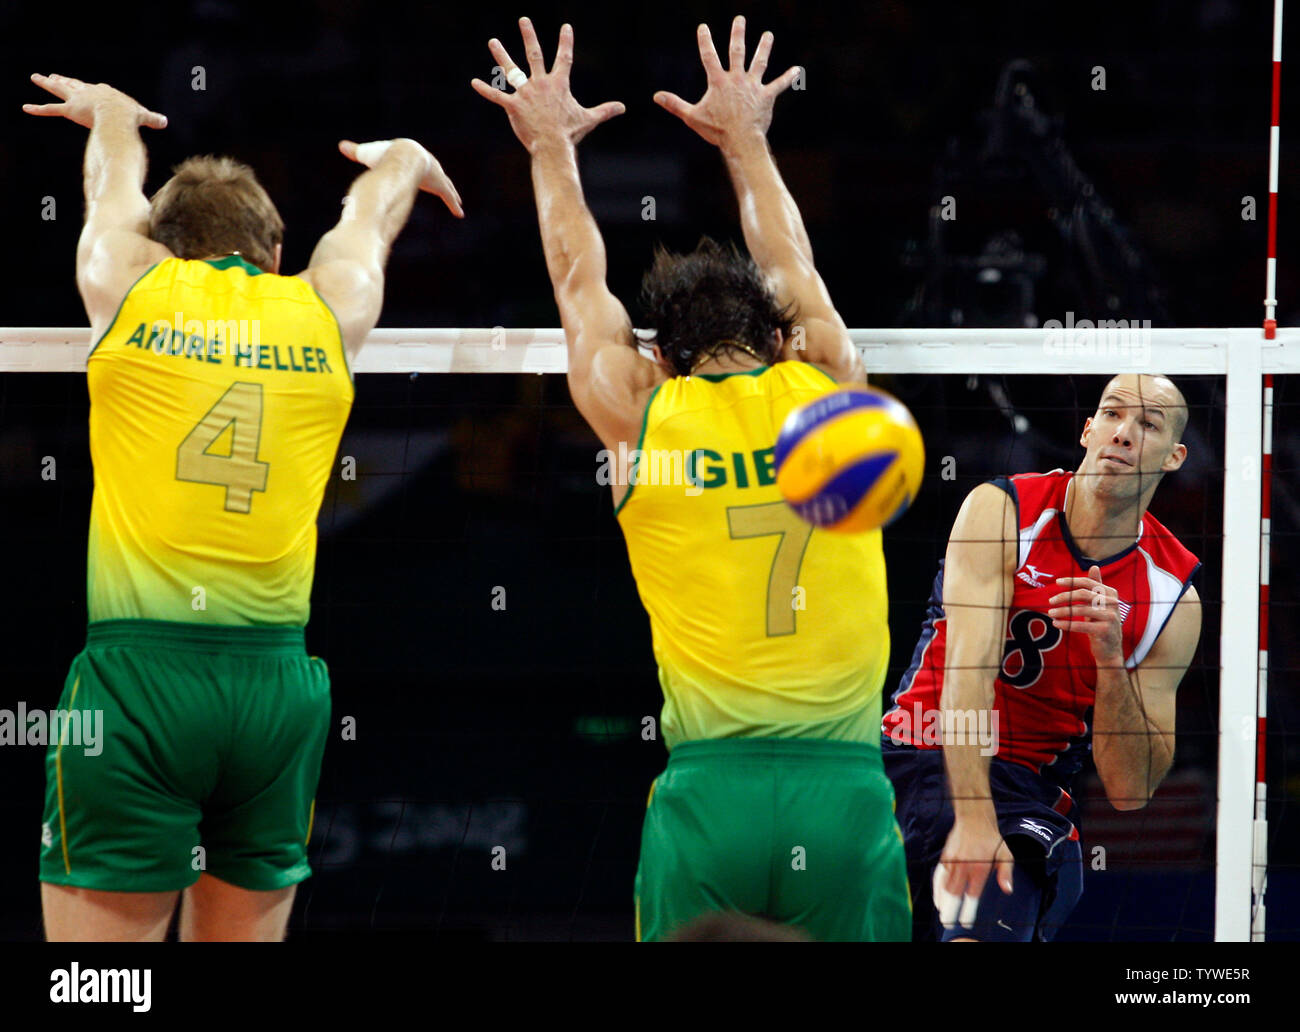 Olympic Volleyball Players of Brazil: Gilberto Godoy Filho